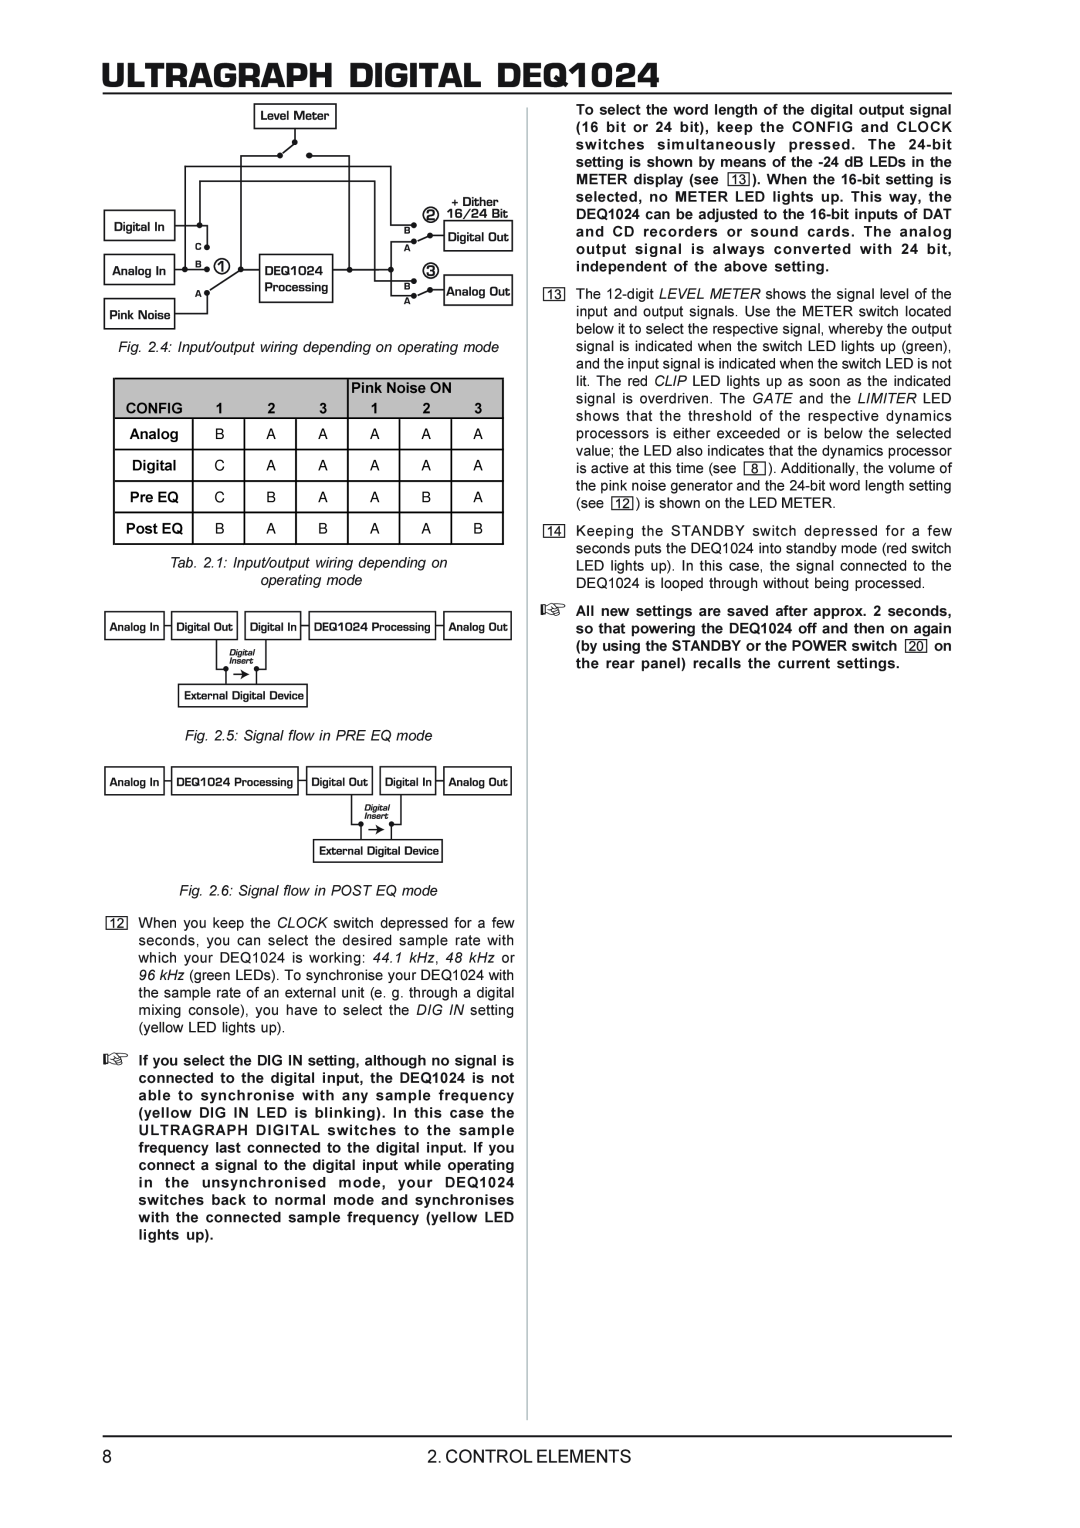 Behringer manual ULTRAGRAPH DIGITAL DEQ1024, Tab. 2.1 Input/output wiring depending on operating mode 